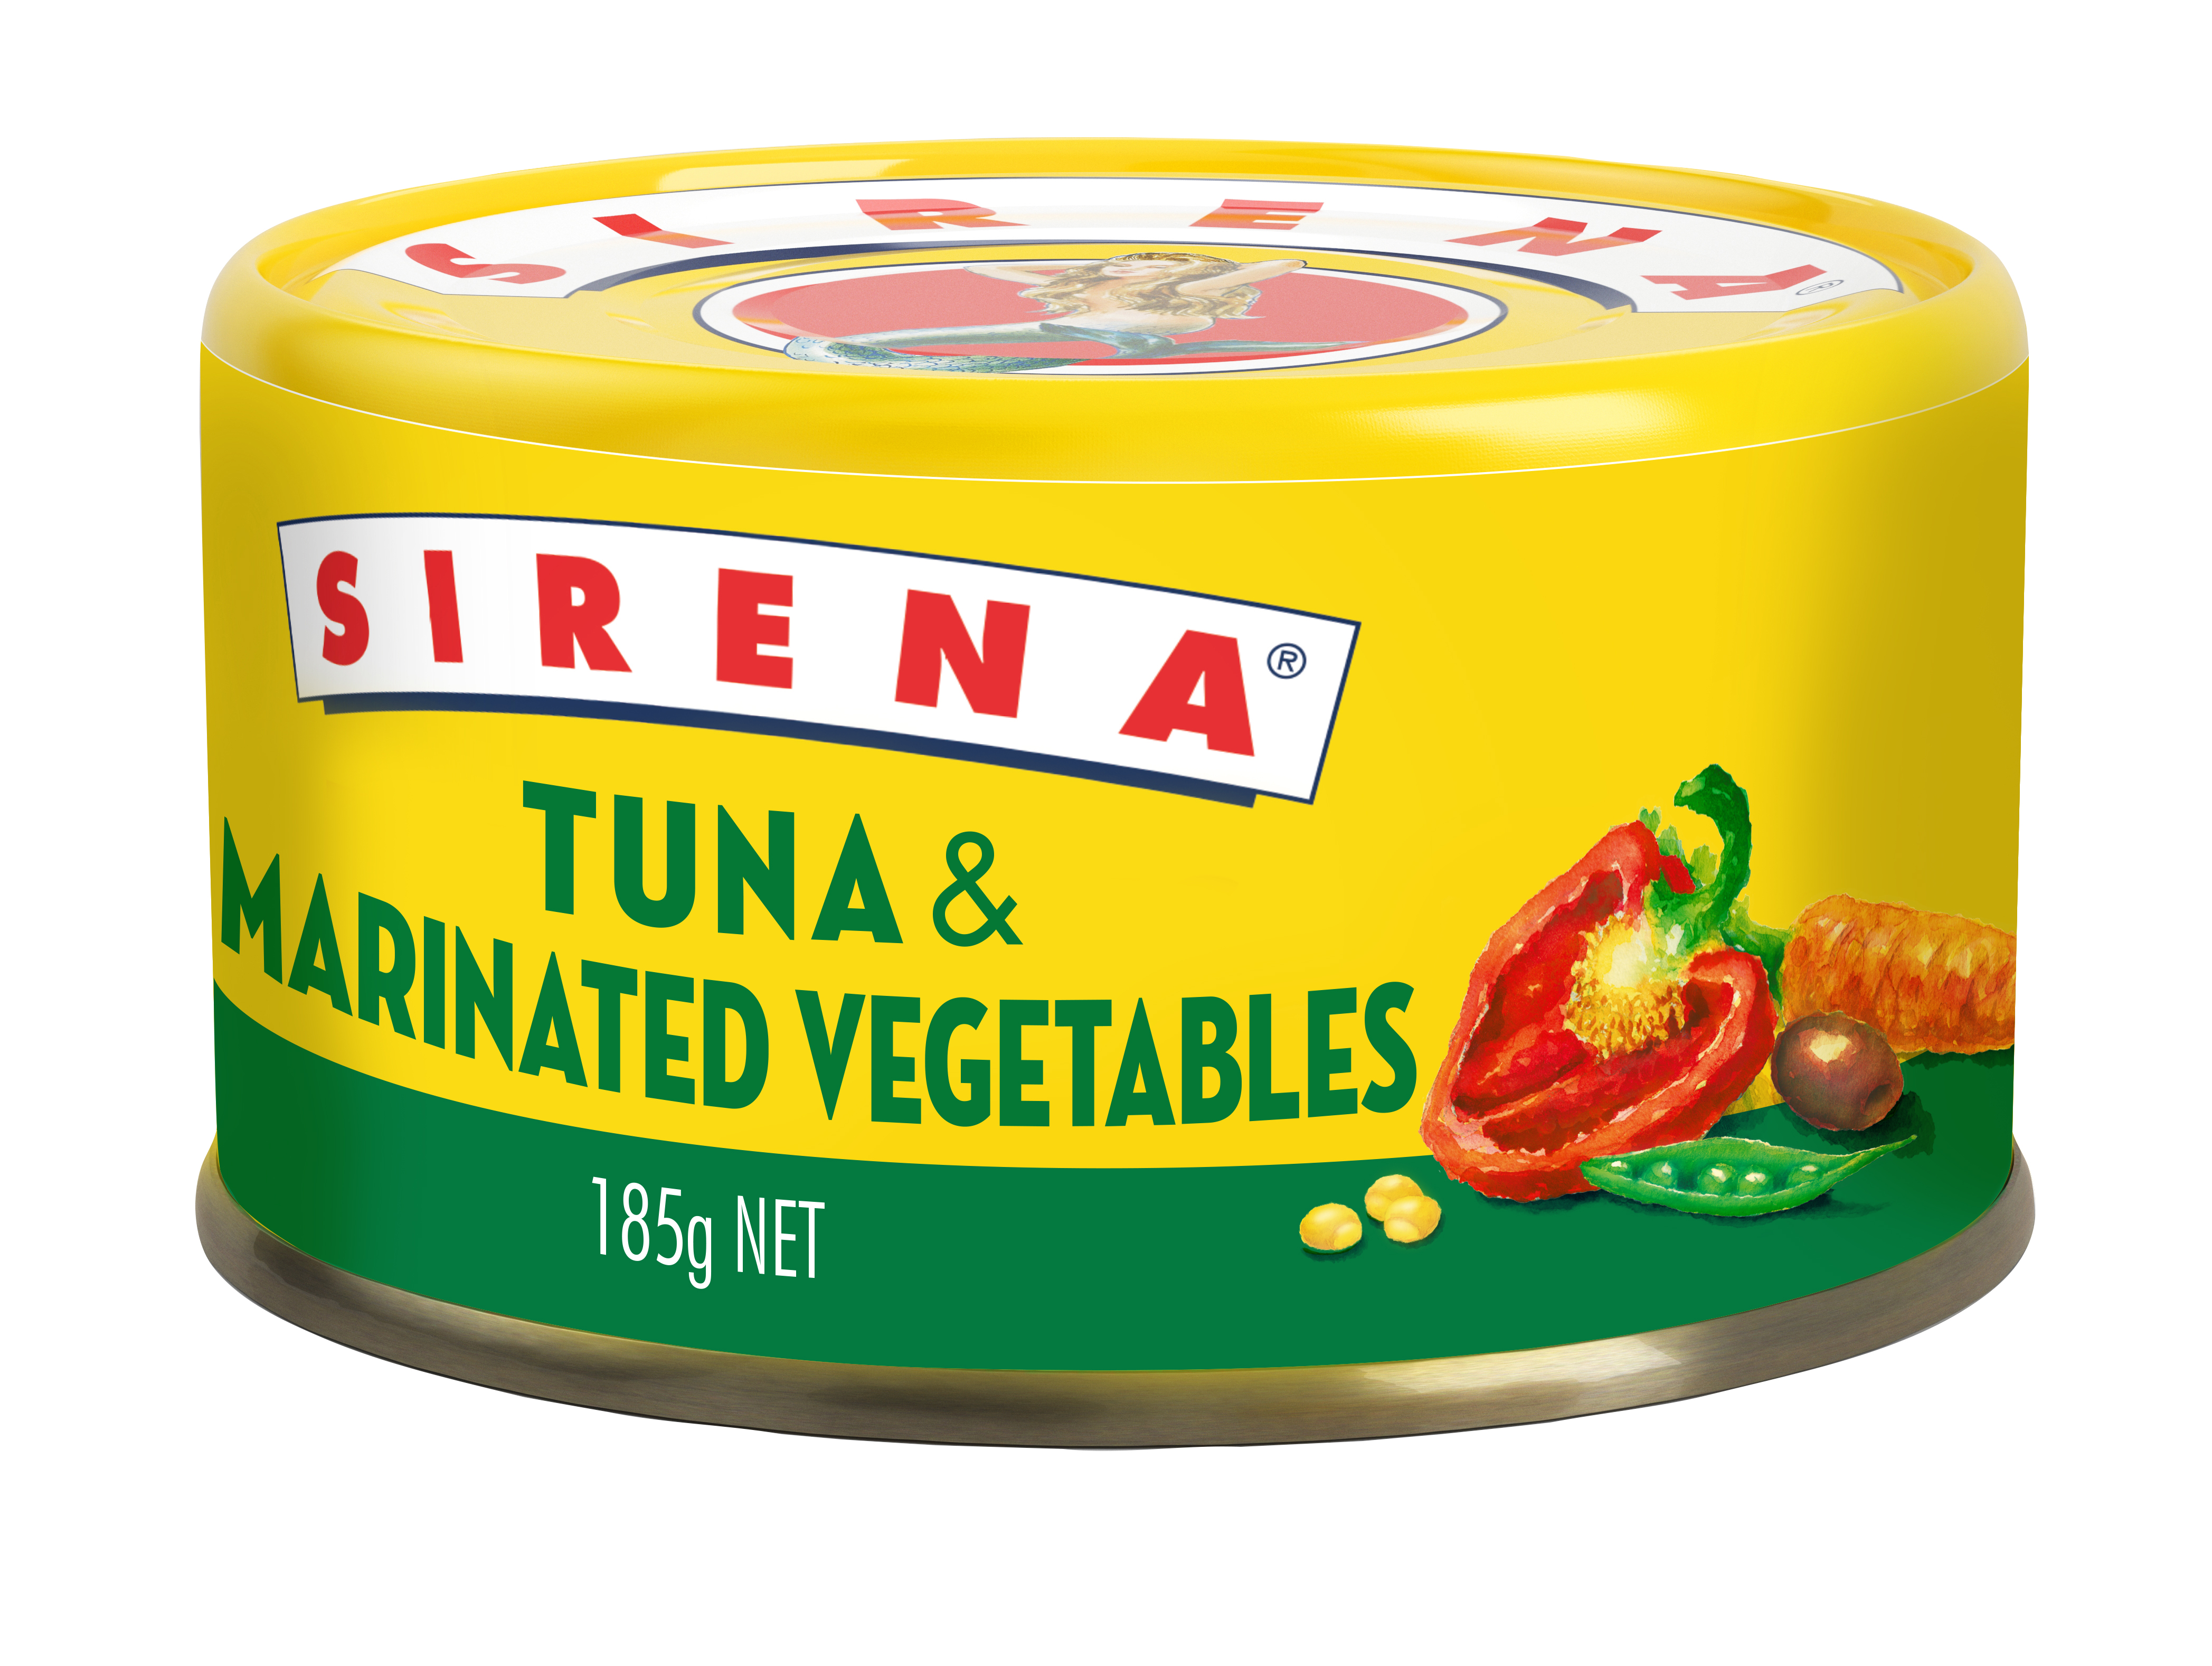 Sirena tuna and marinated vegetables